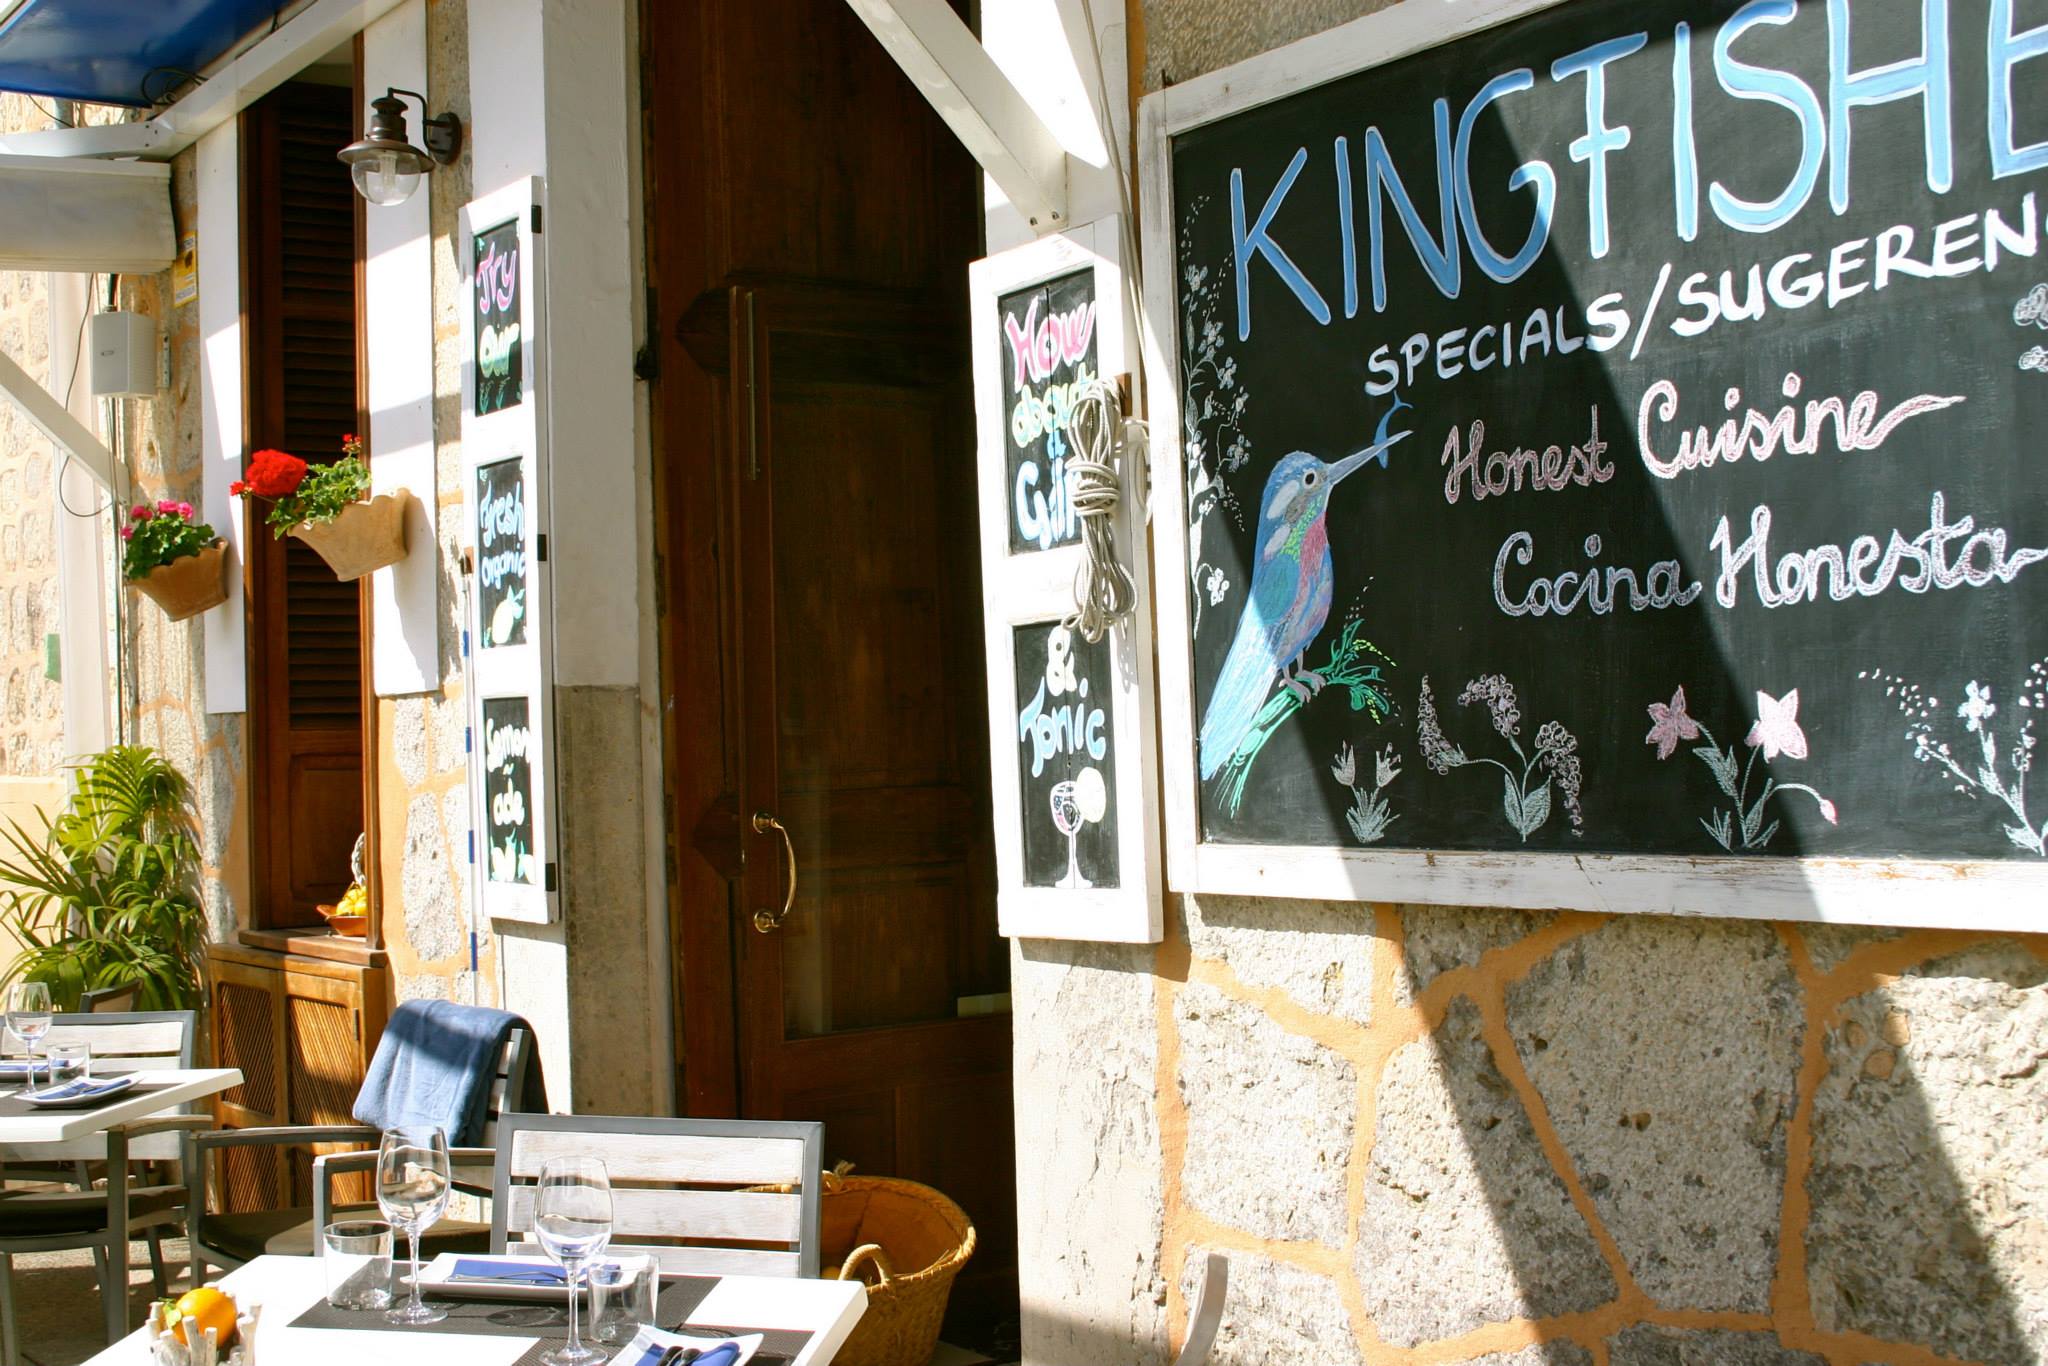 Kingfisher restaurant